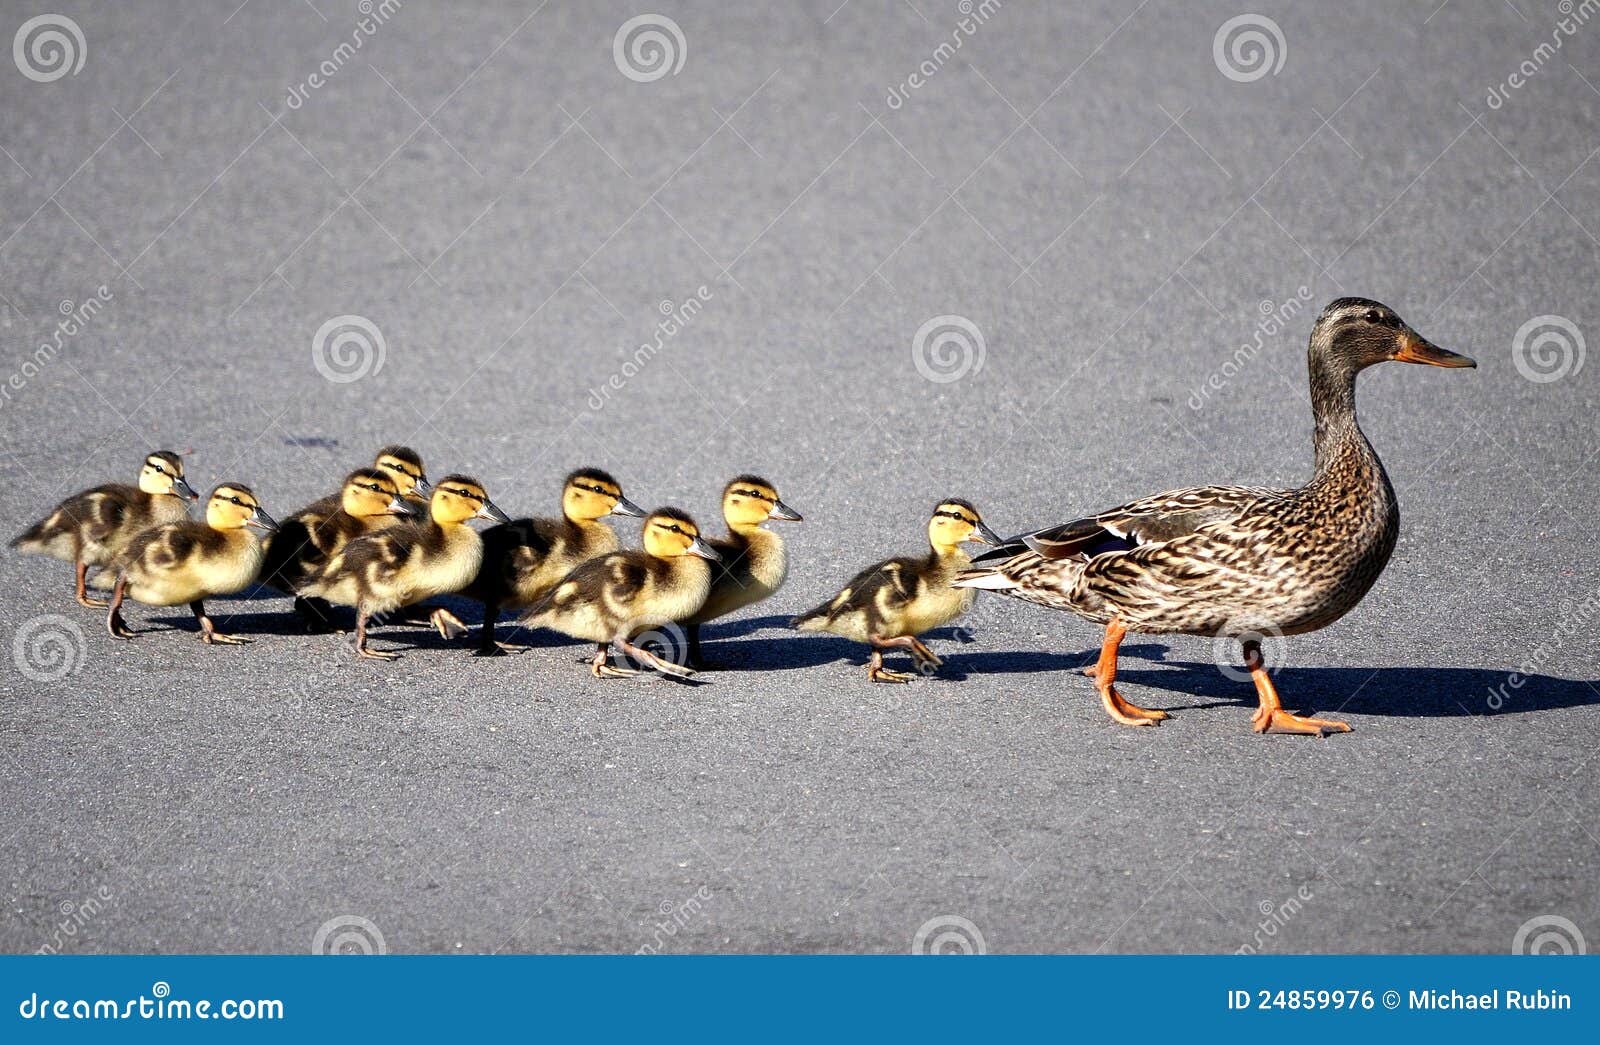 ducks crossing the road